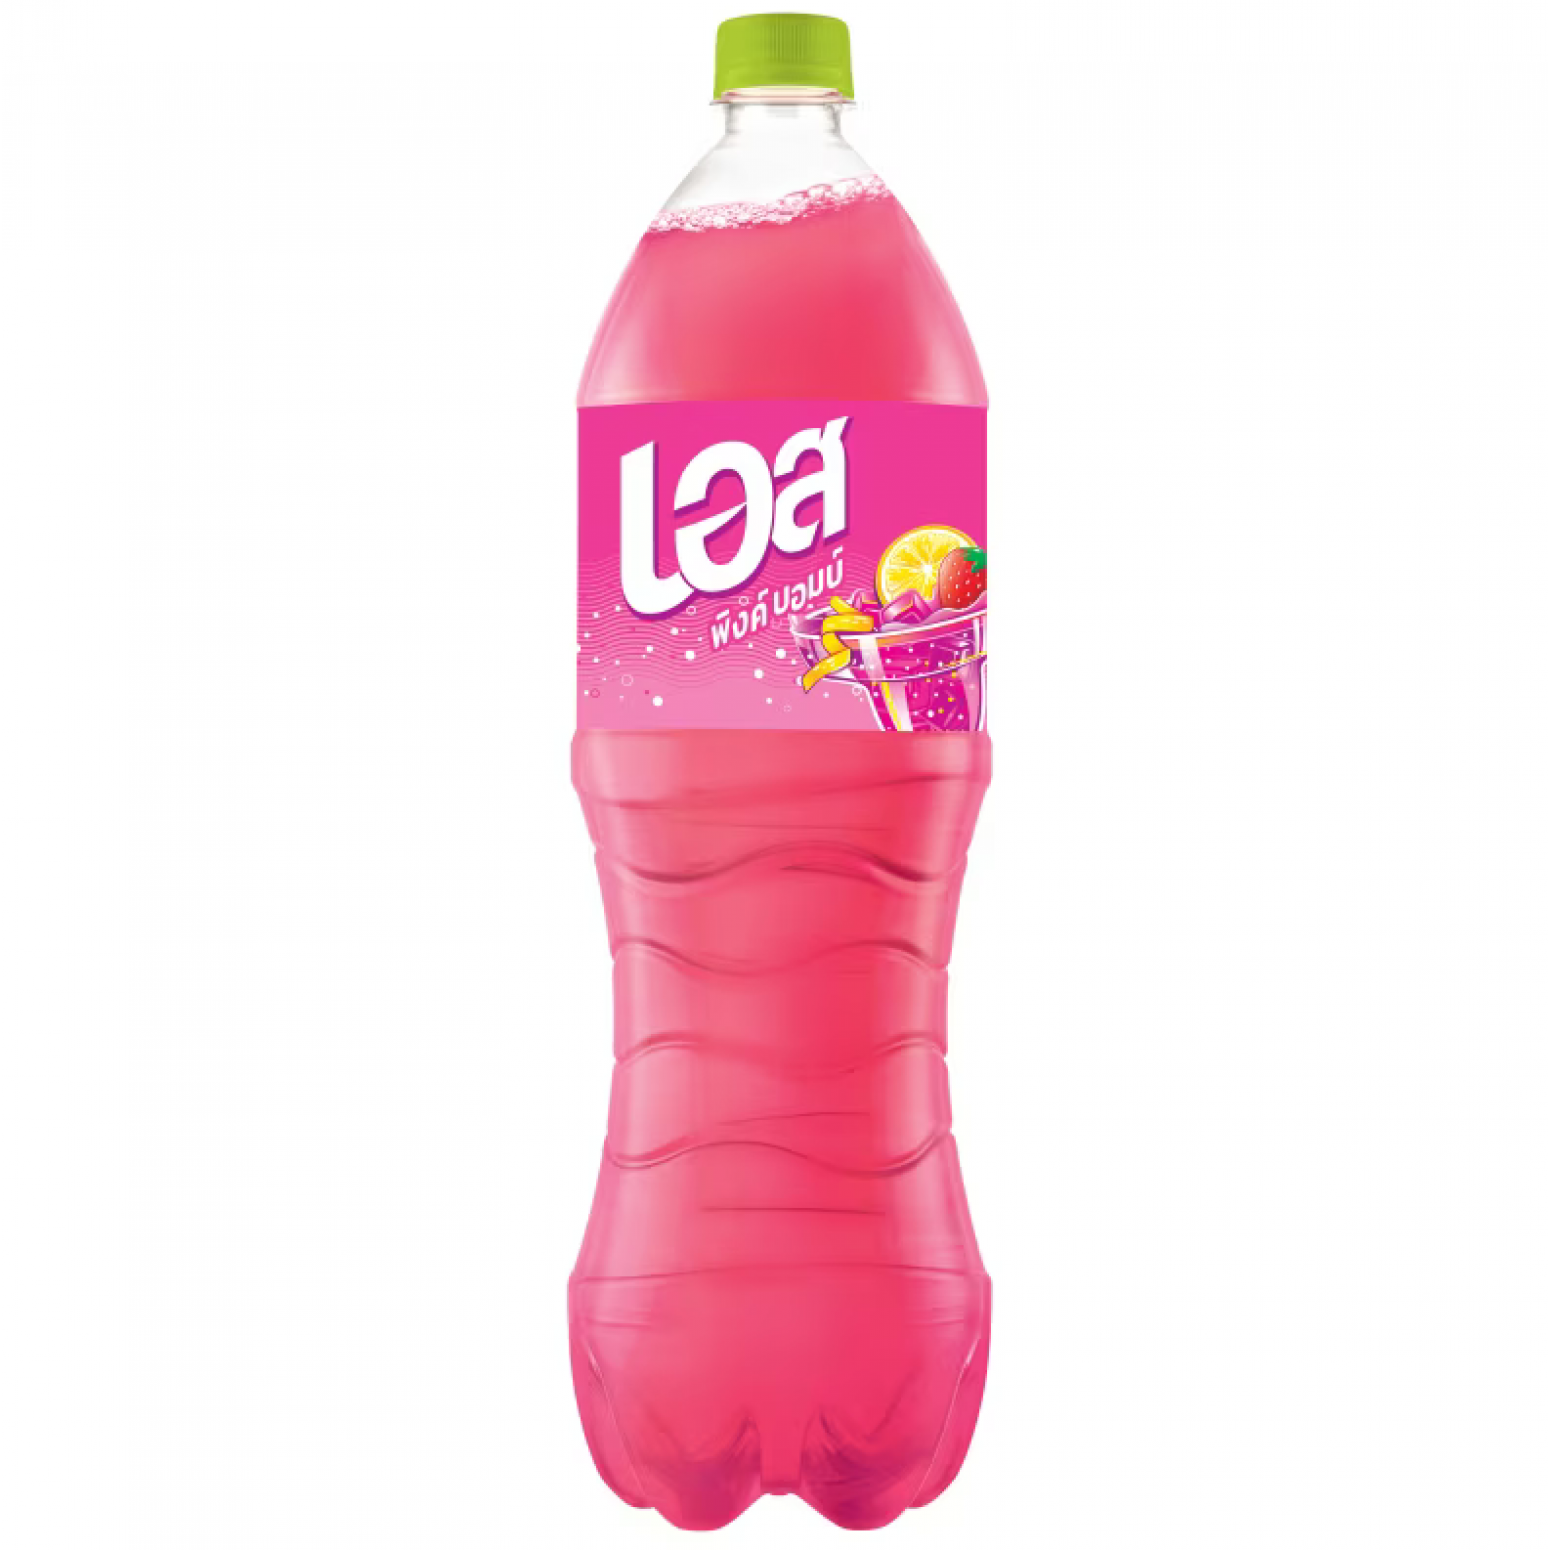 Est Pink Bomb Strawberry Lime 1.6ltr.